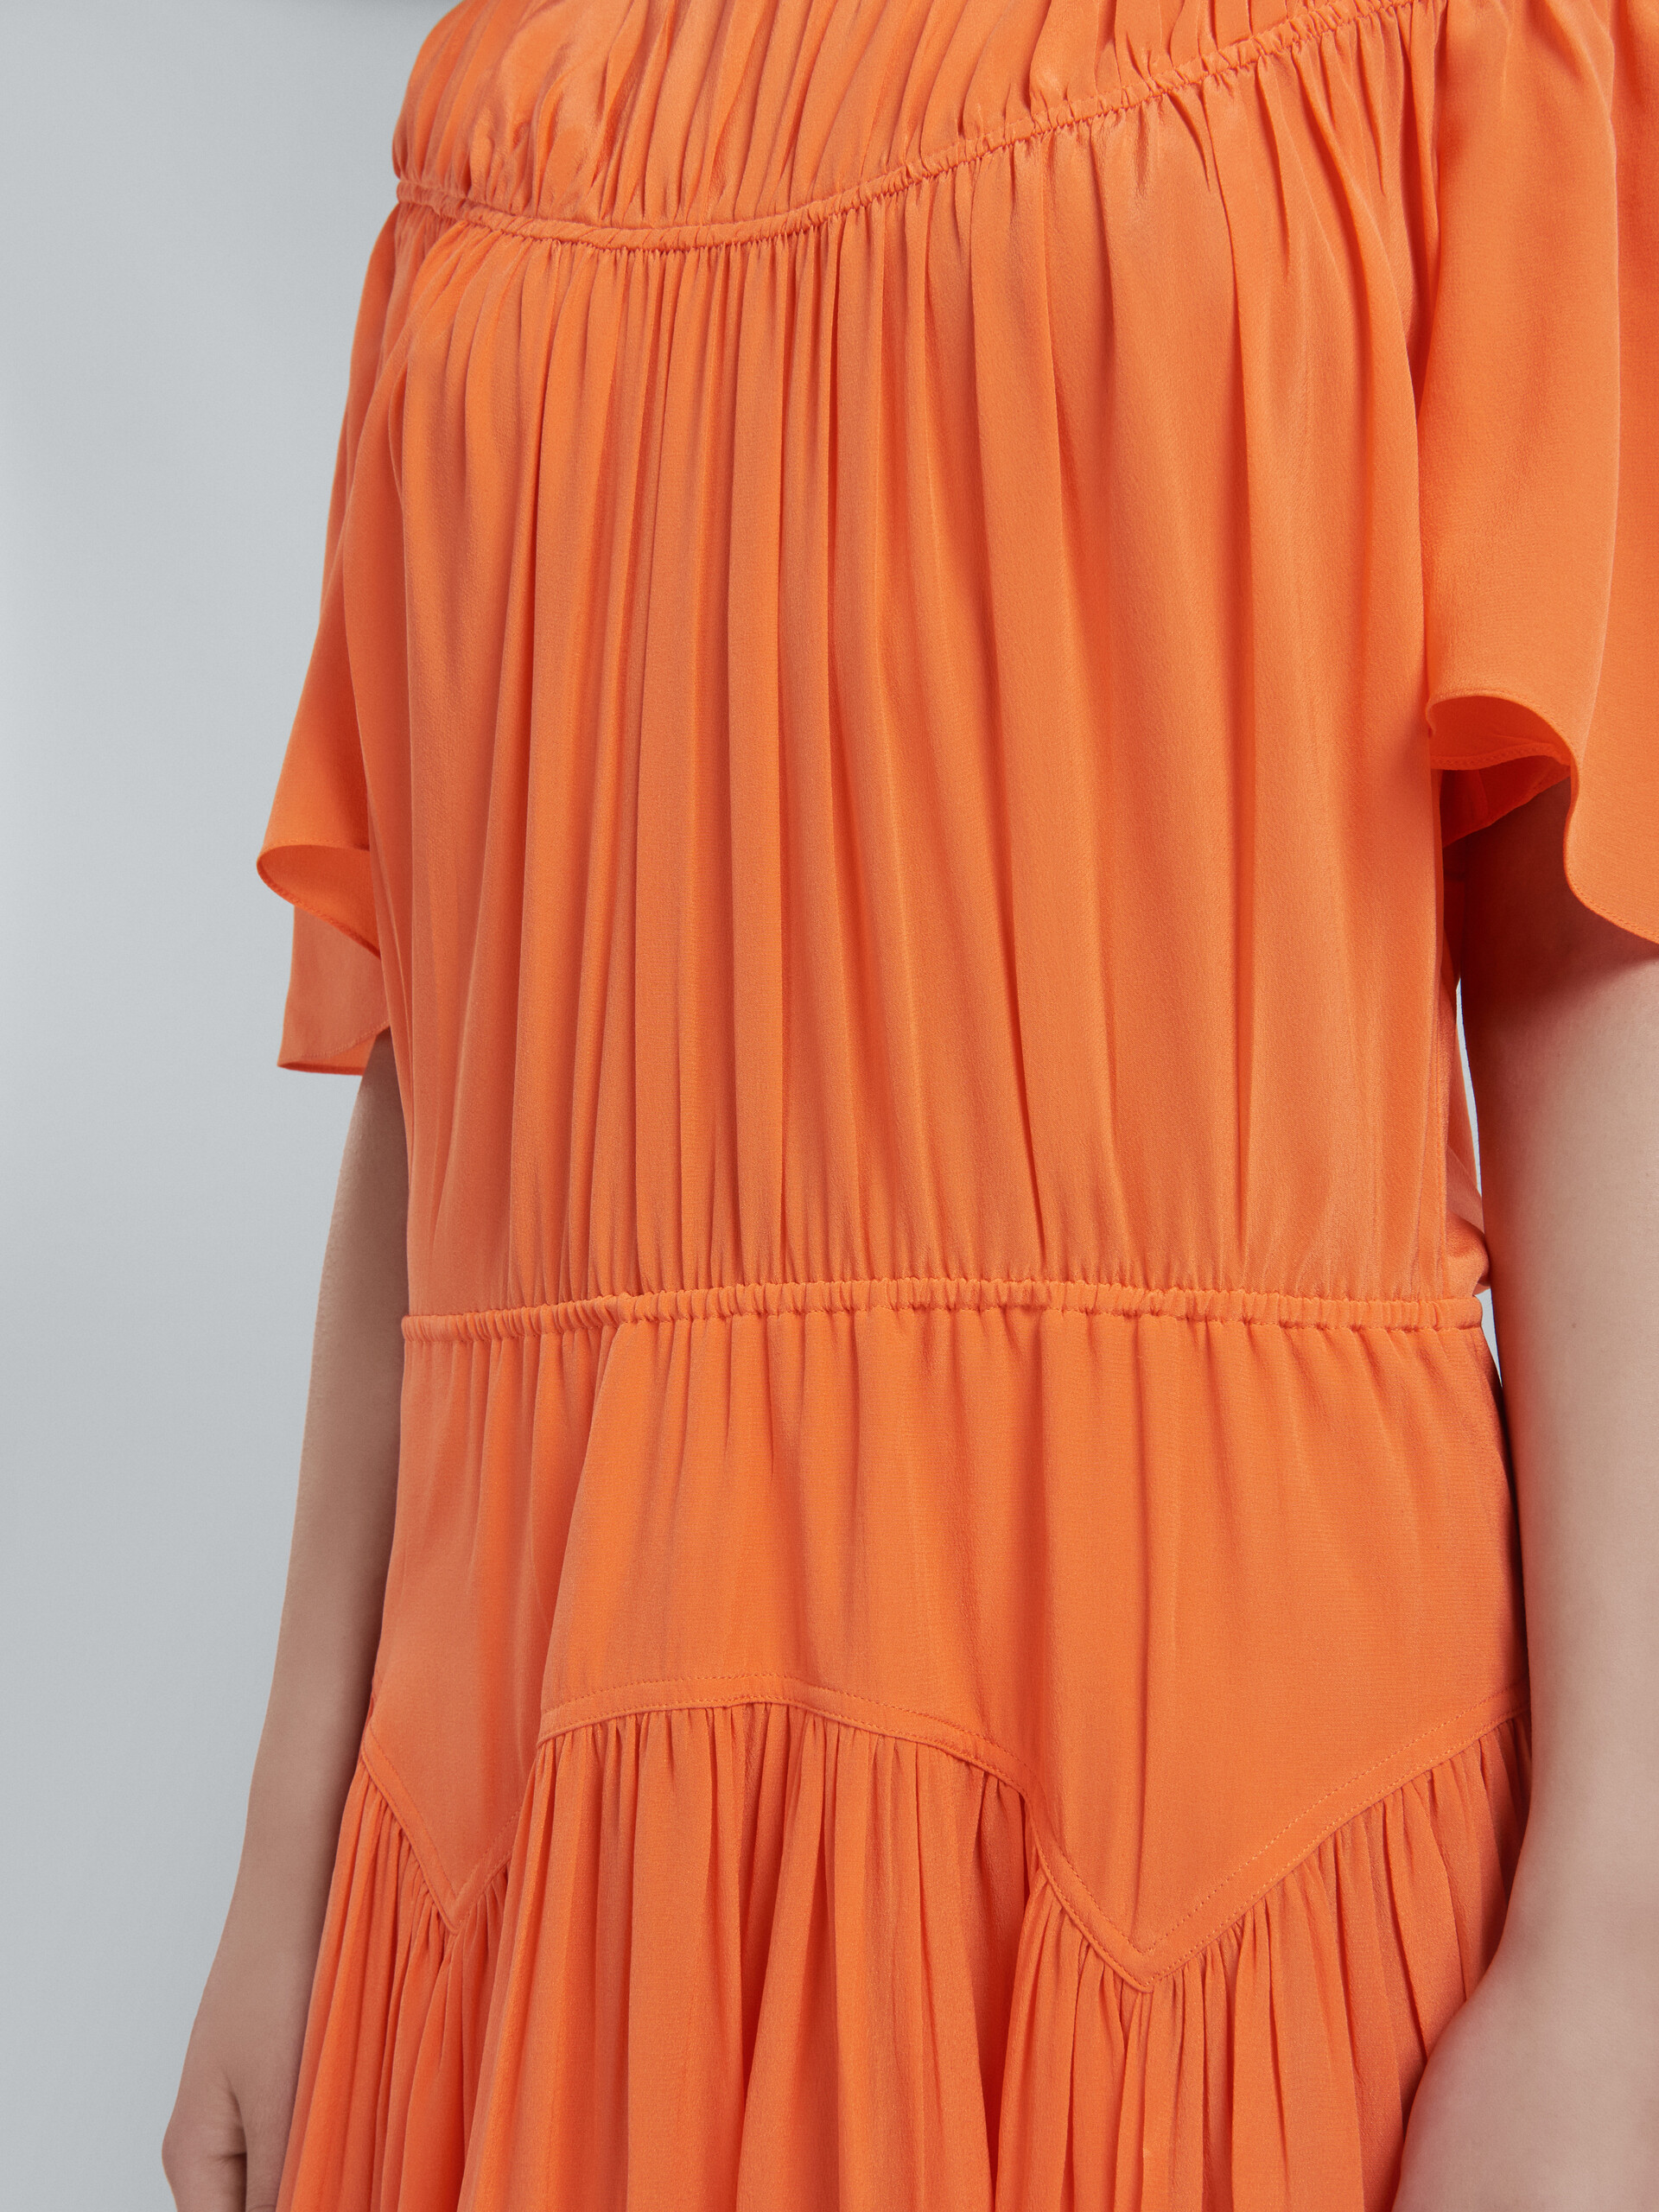 Long dress in orange silk - Dresses - Image 5